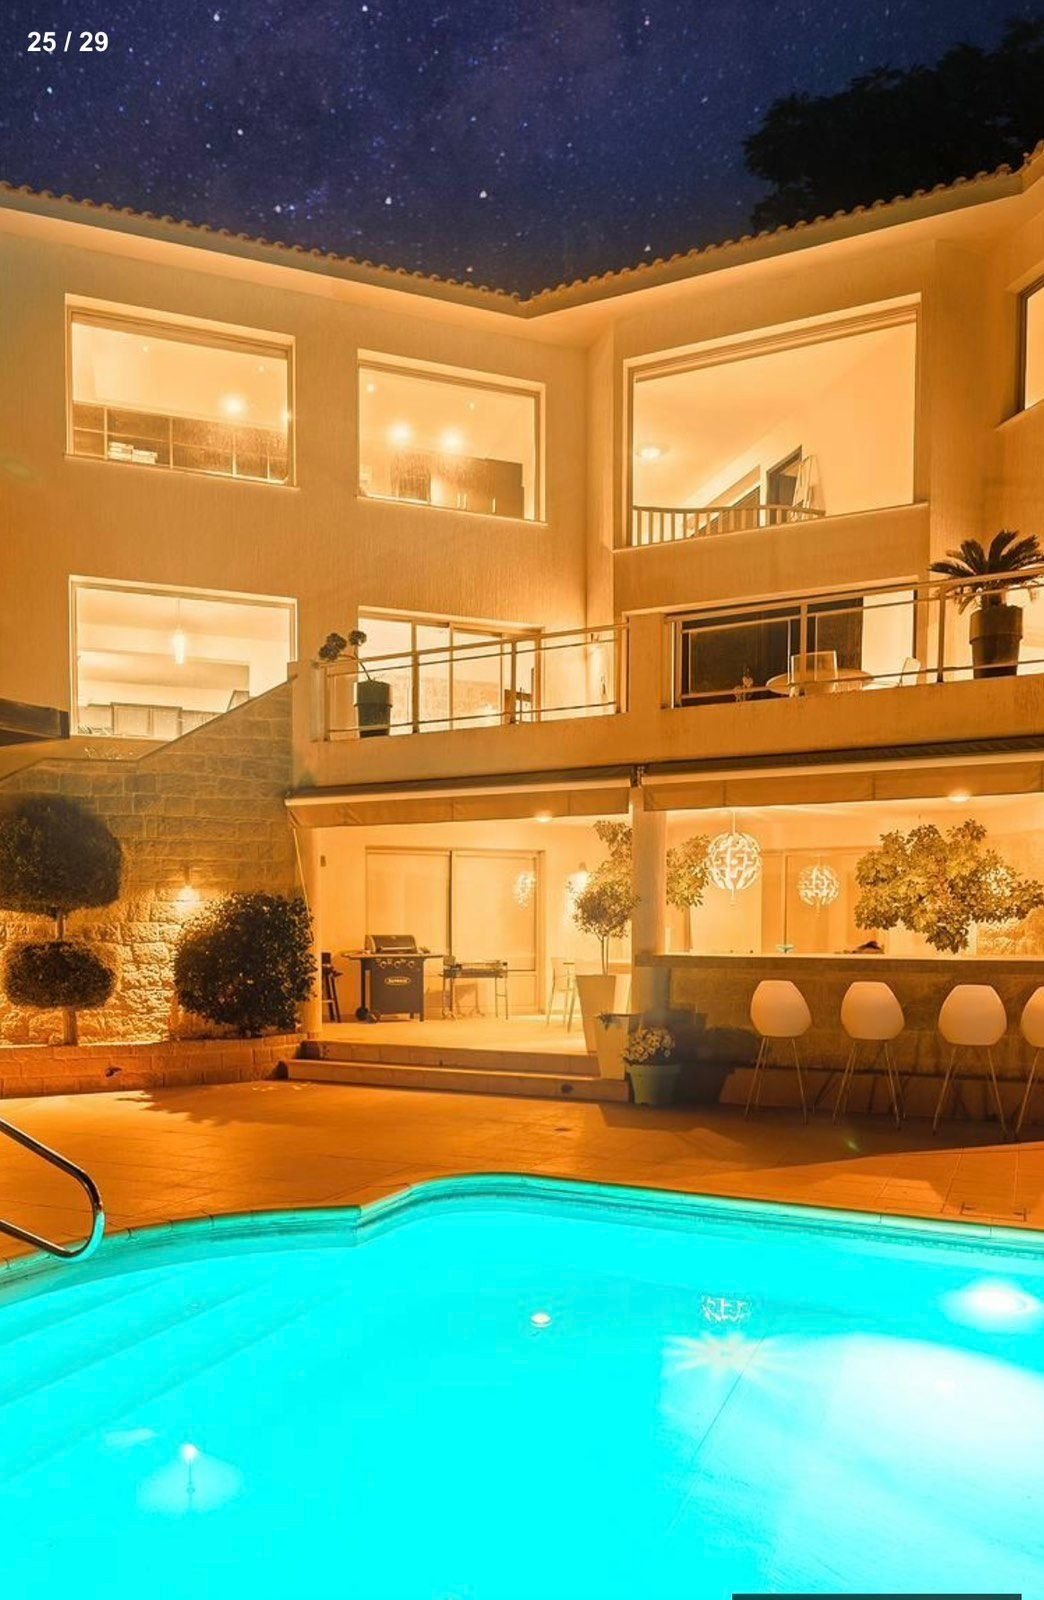 6+ Bedroom Villa for Sale in Tala, Paphos District